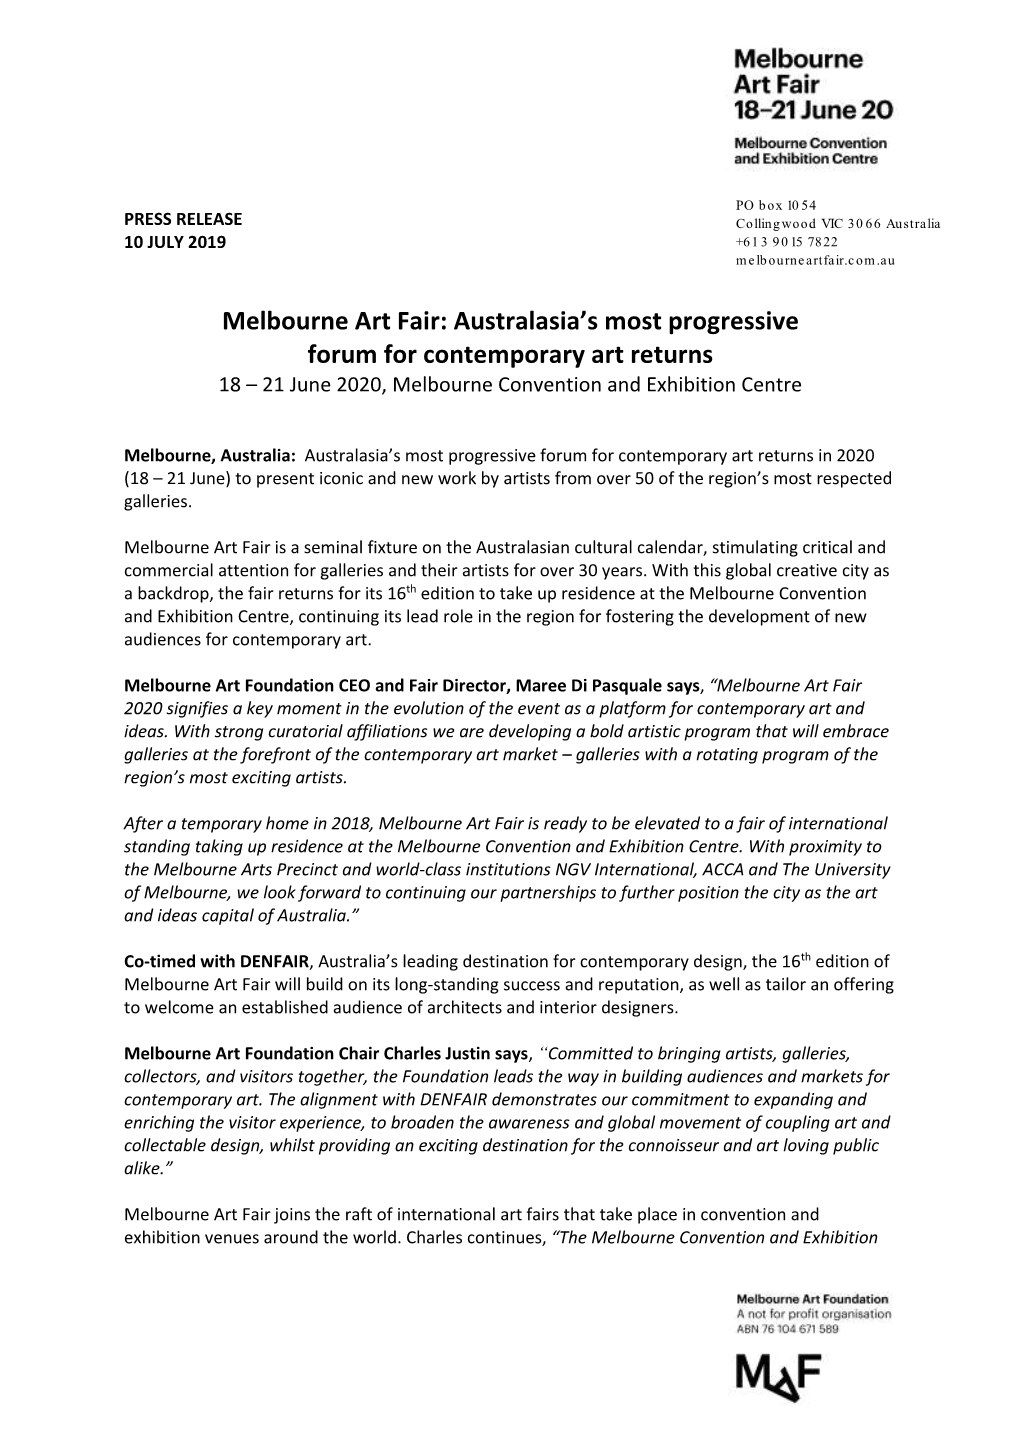 Australasia's Most Progressive Forum for Contemporary Art Returns